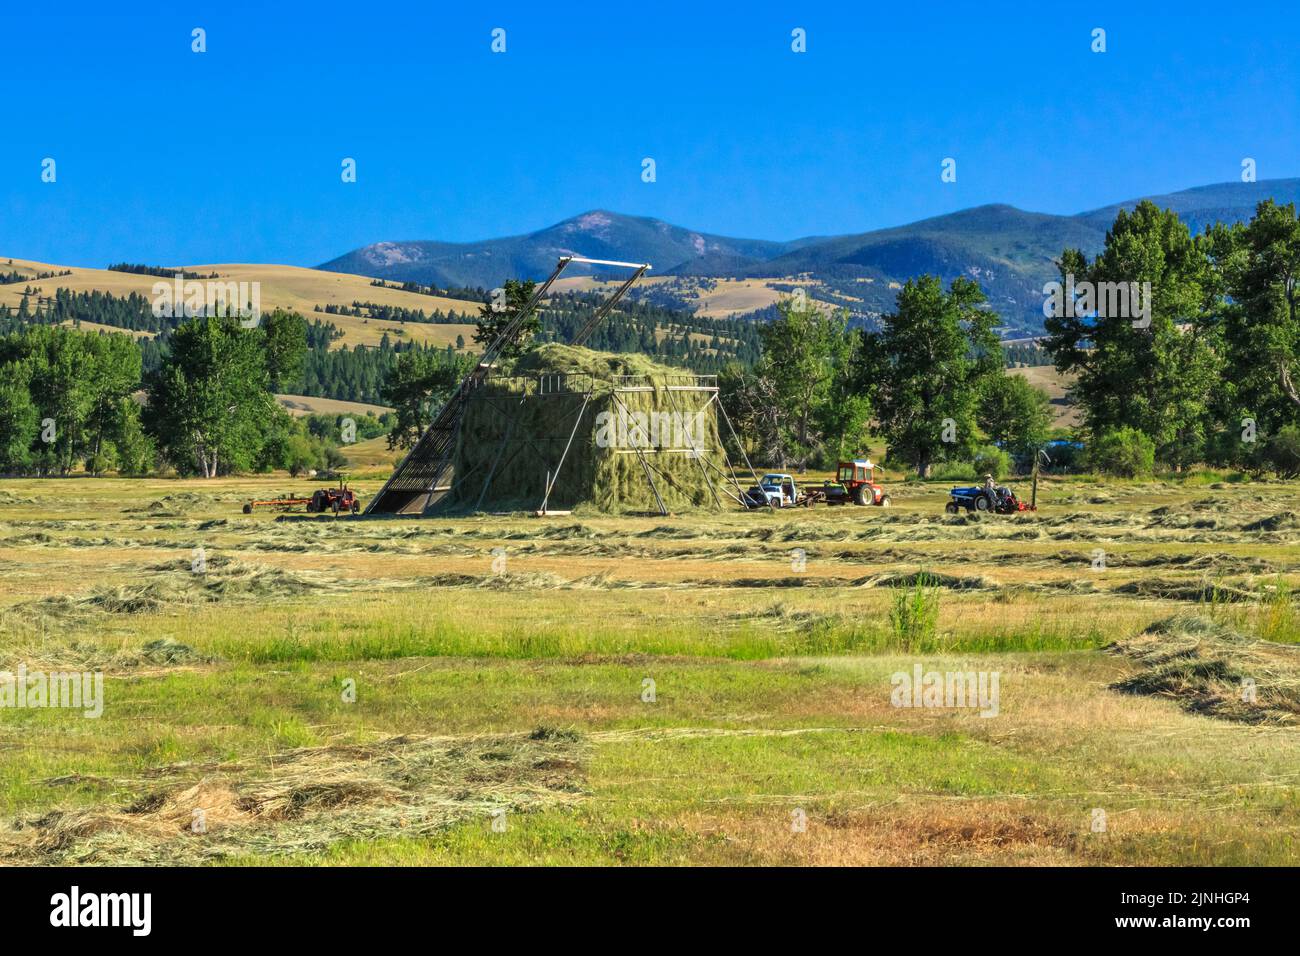 beaverslide haystack and tractors in the avon valley near avon, montana Stock Photo